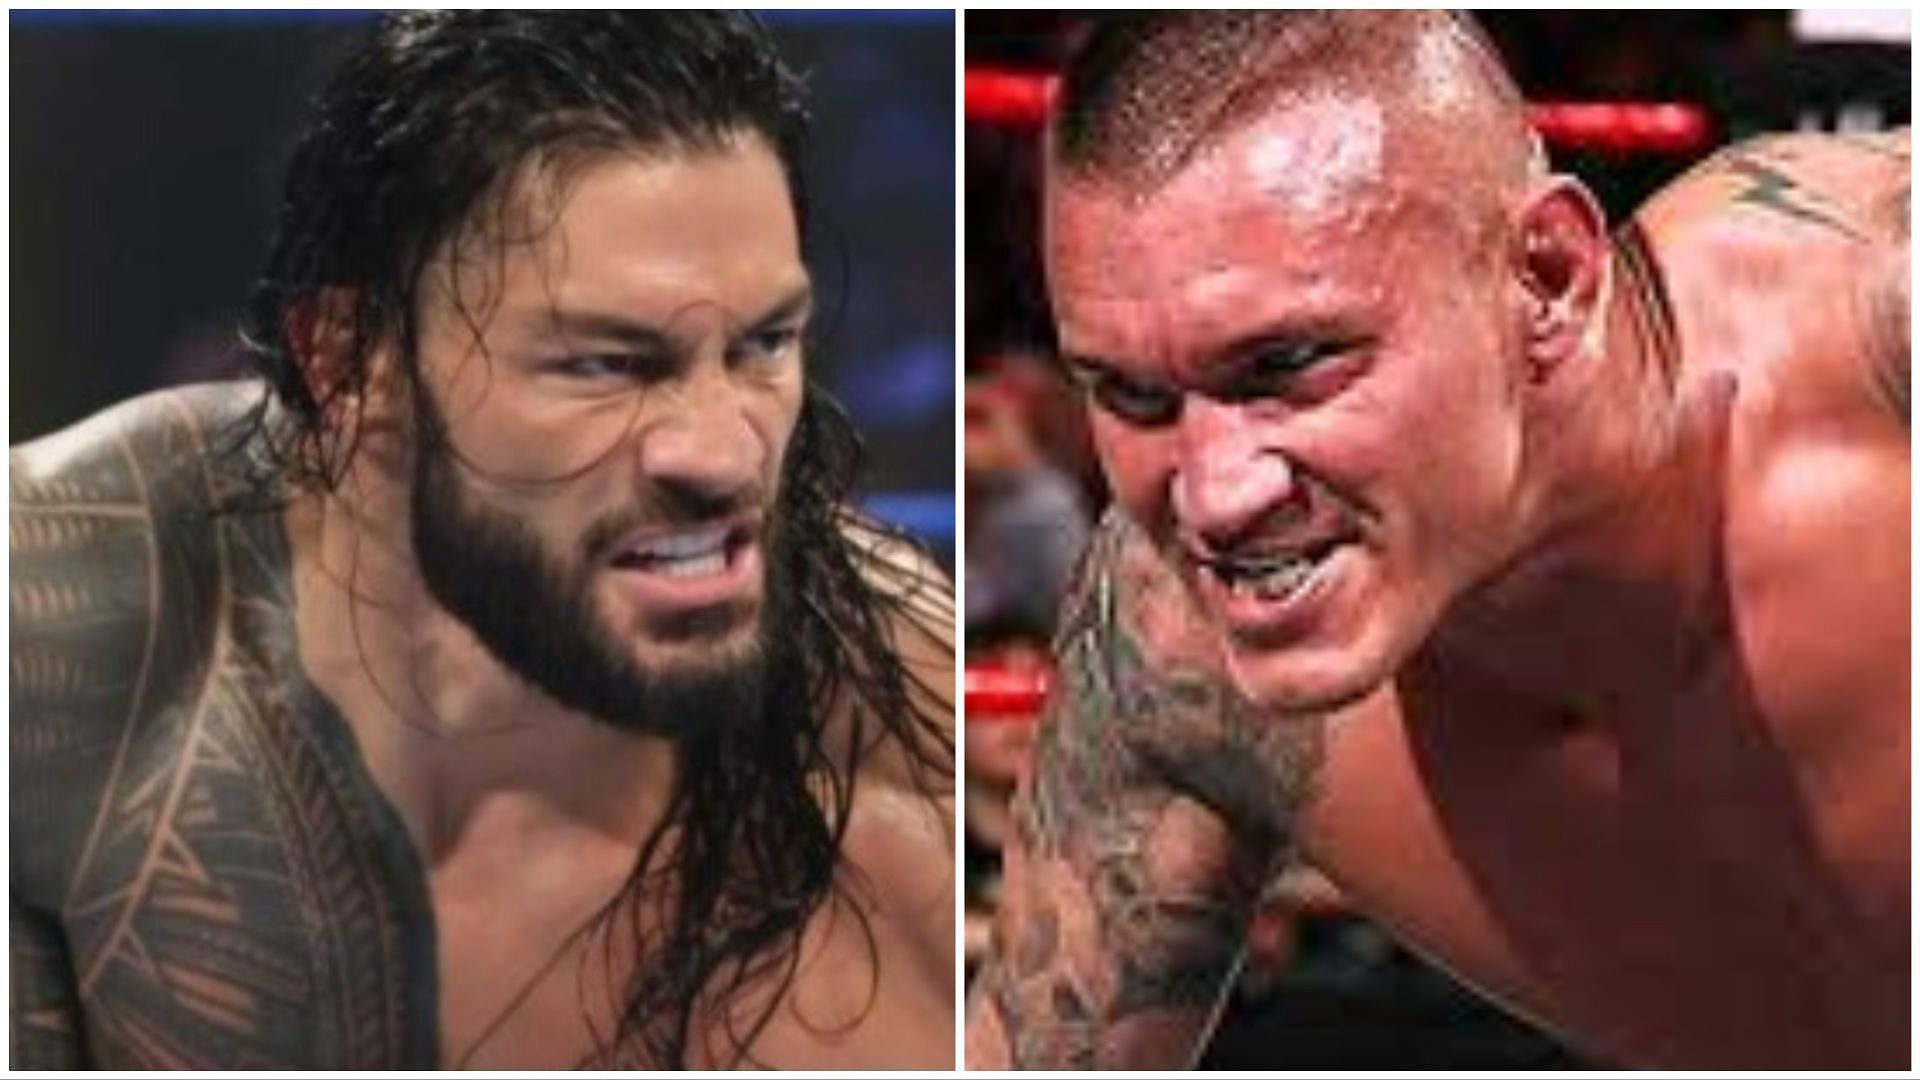 WWE Superstars Roman Reigns and Randy Orton